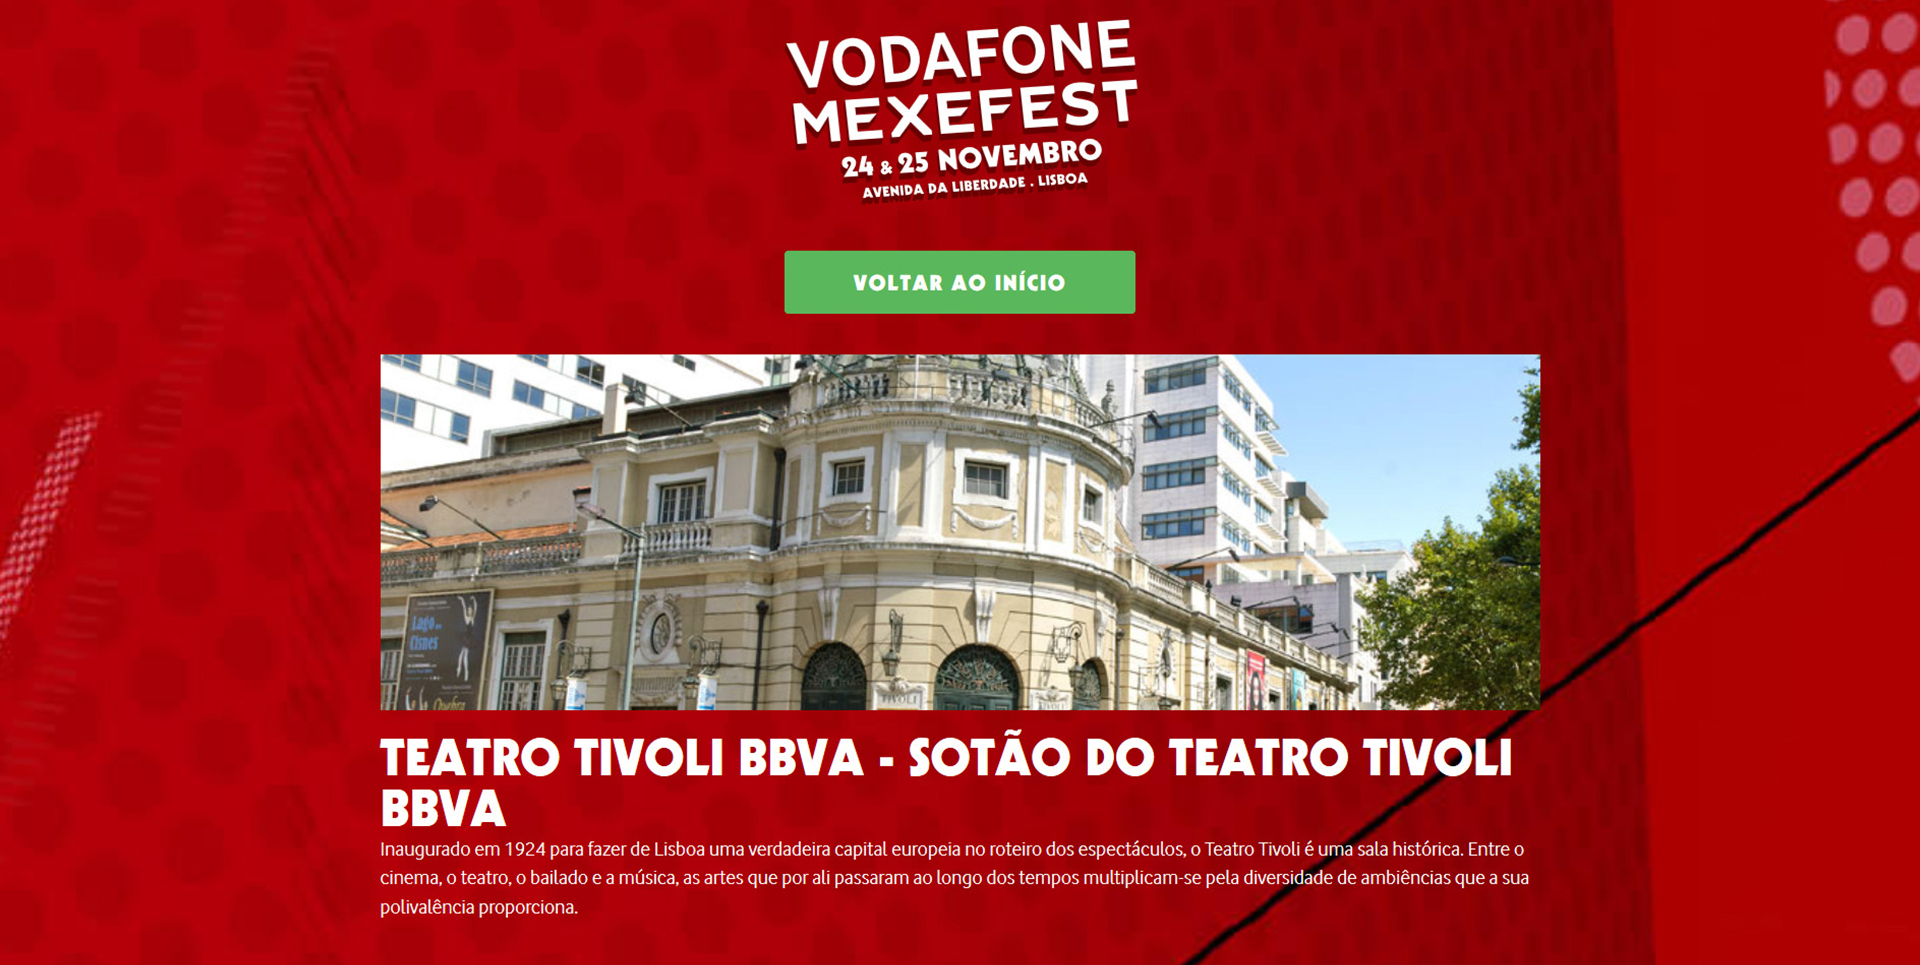 Vodafone - Mexefest